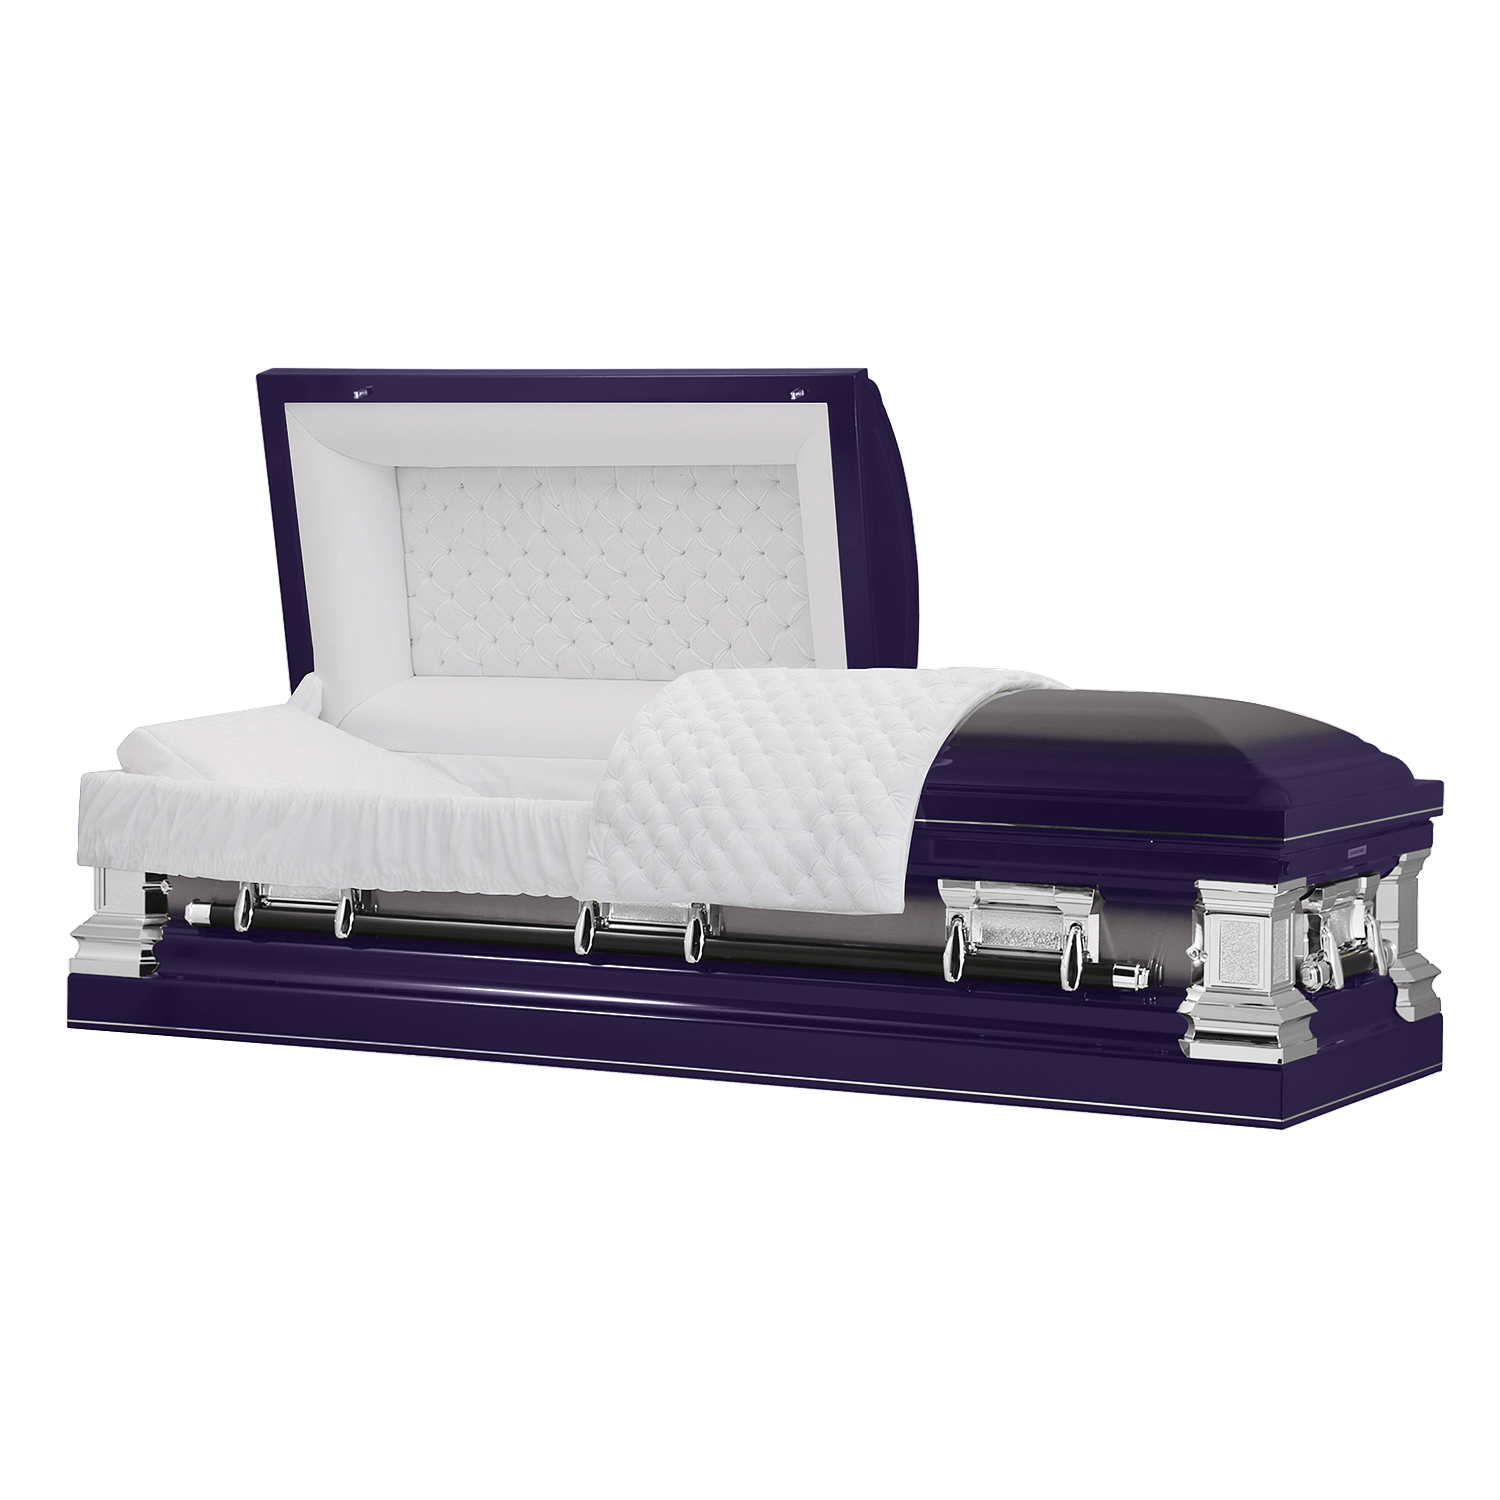 Era Series | Royal Purple Stainless Steel Casket with White Interior - Titan Casket